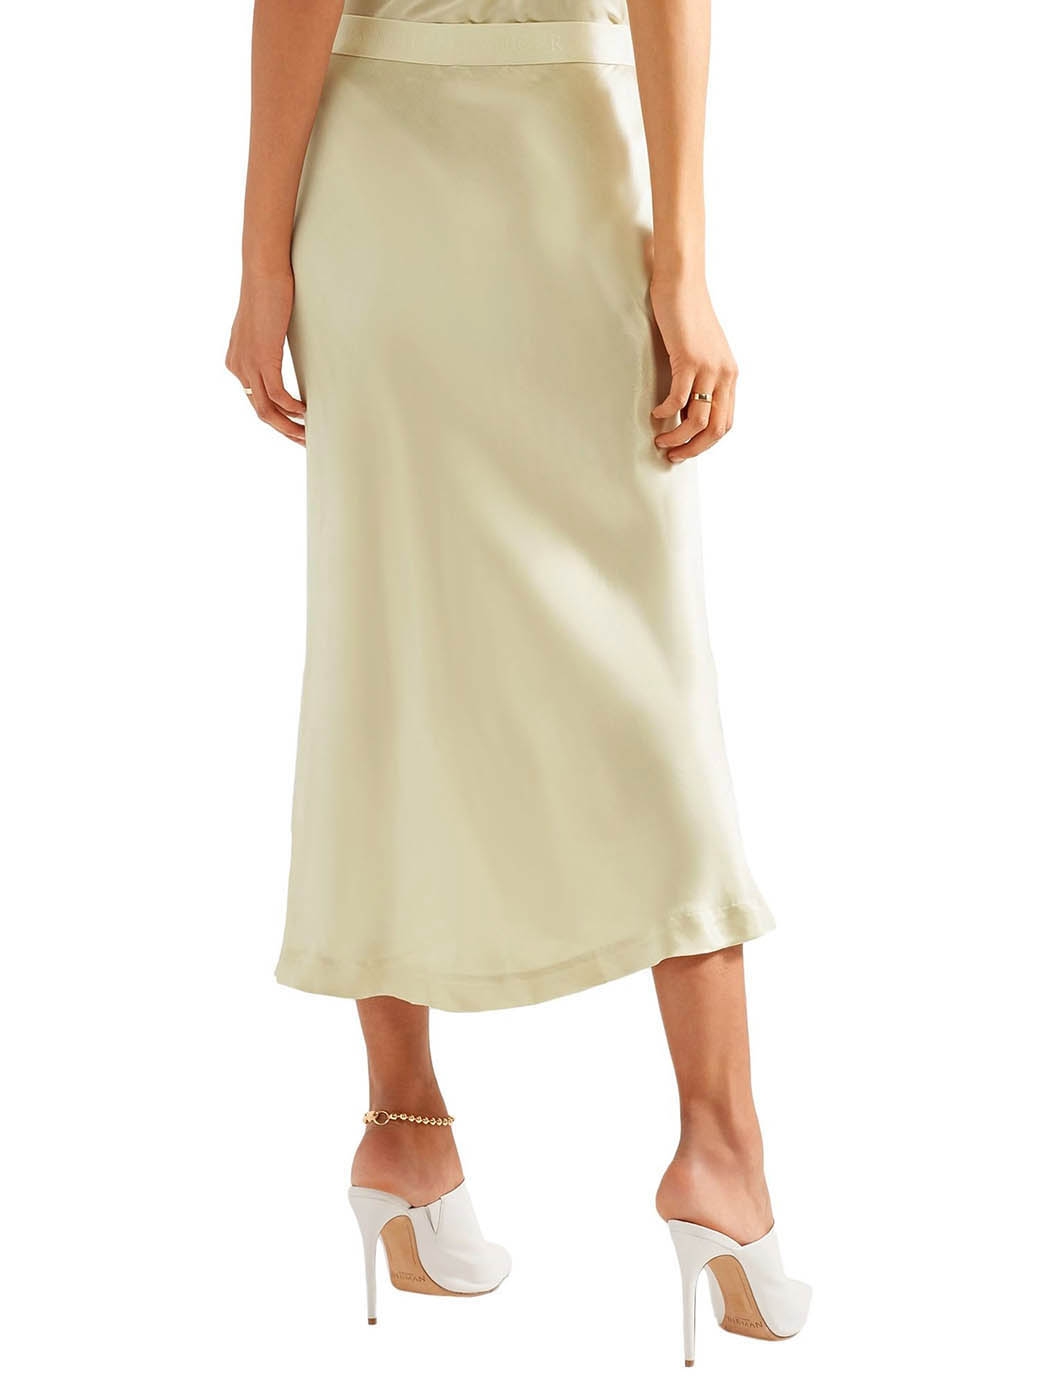 Boutique BY MALENE BIRGER Kimberley cream white satin midi length skirt  Retail price $495 Size XL